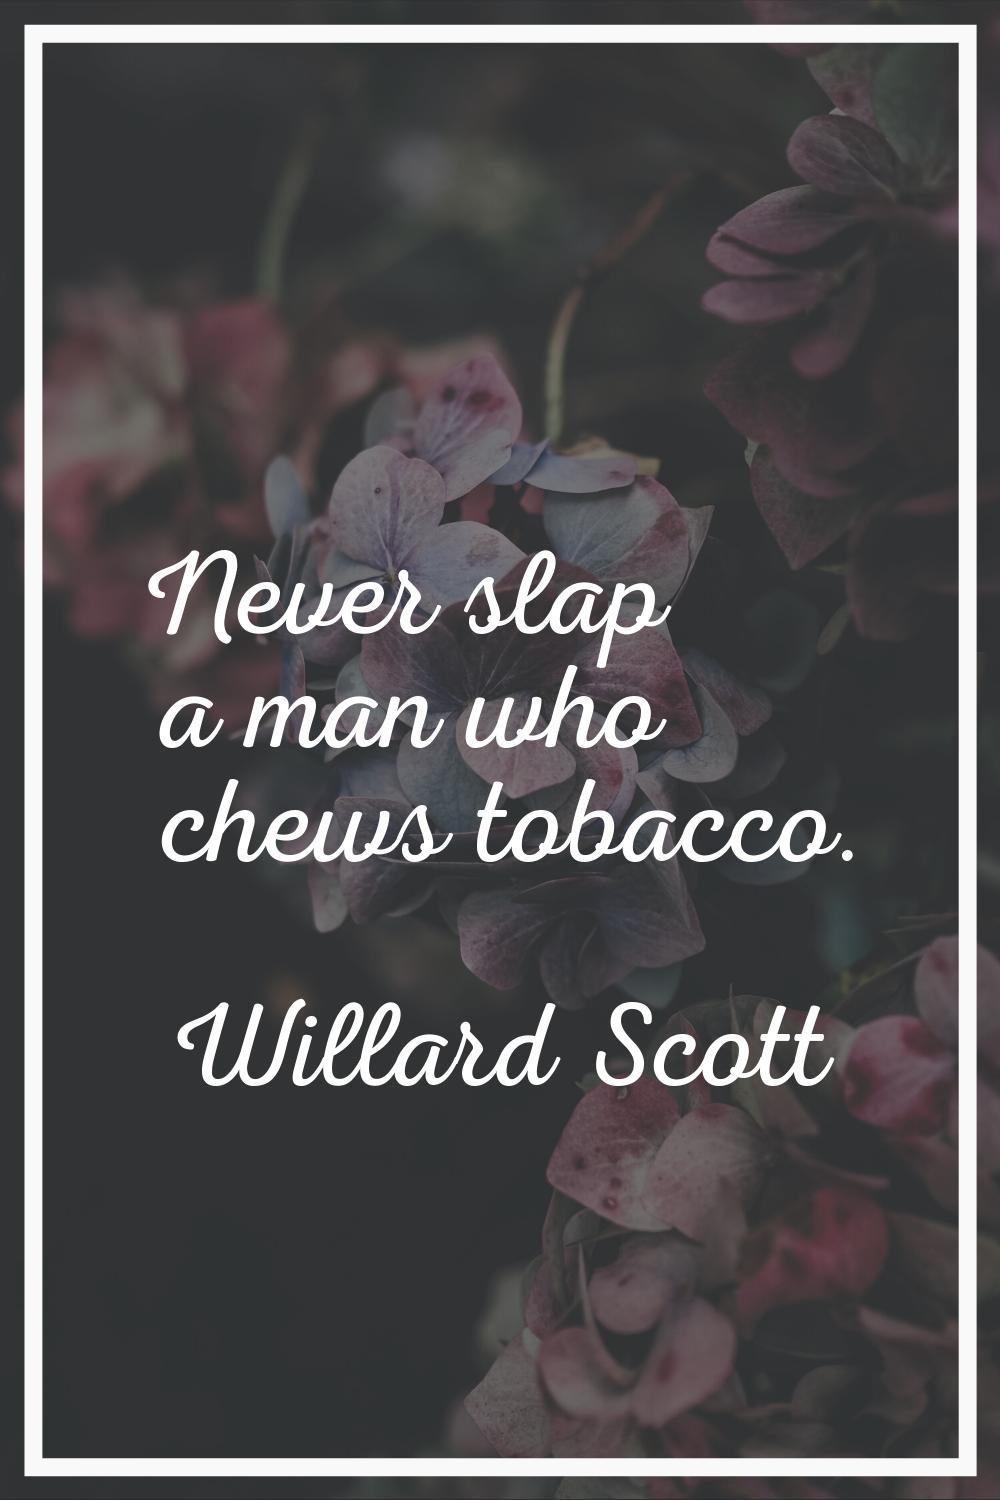 Never slap a man who chews tobacco.